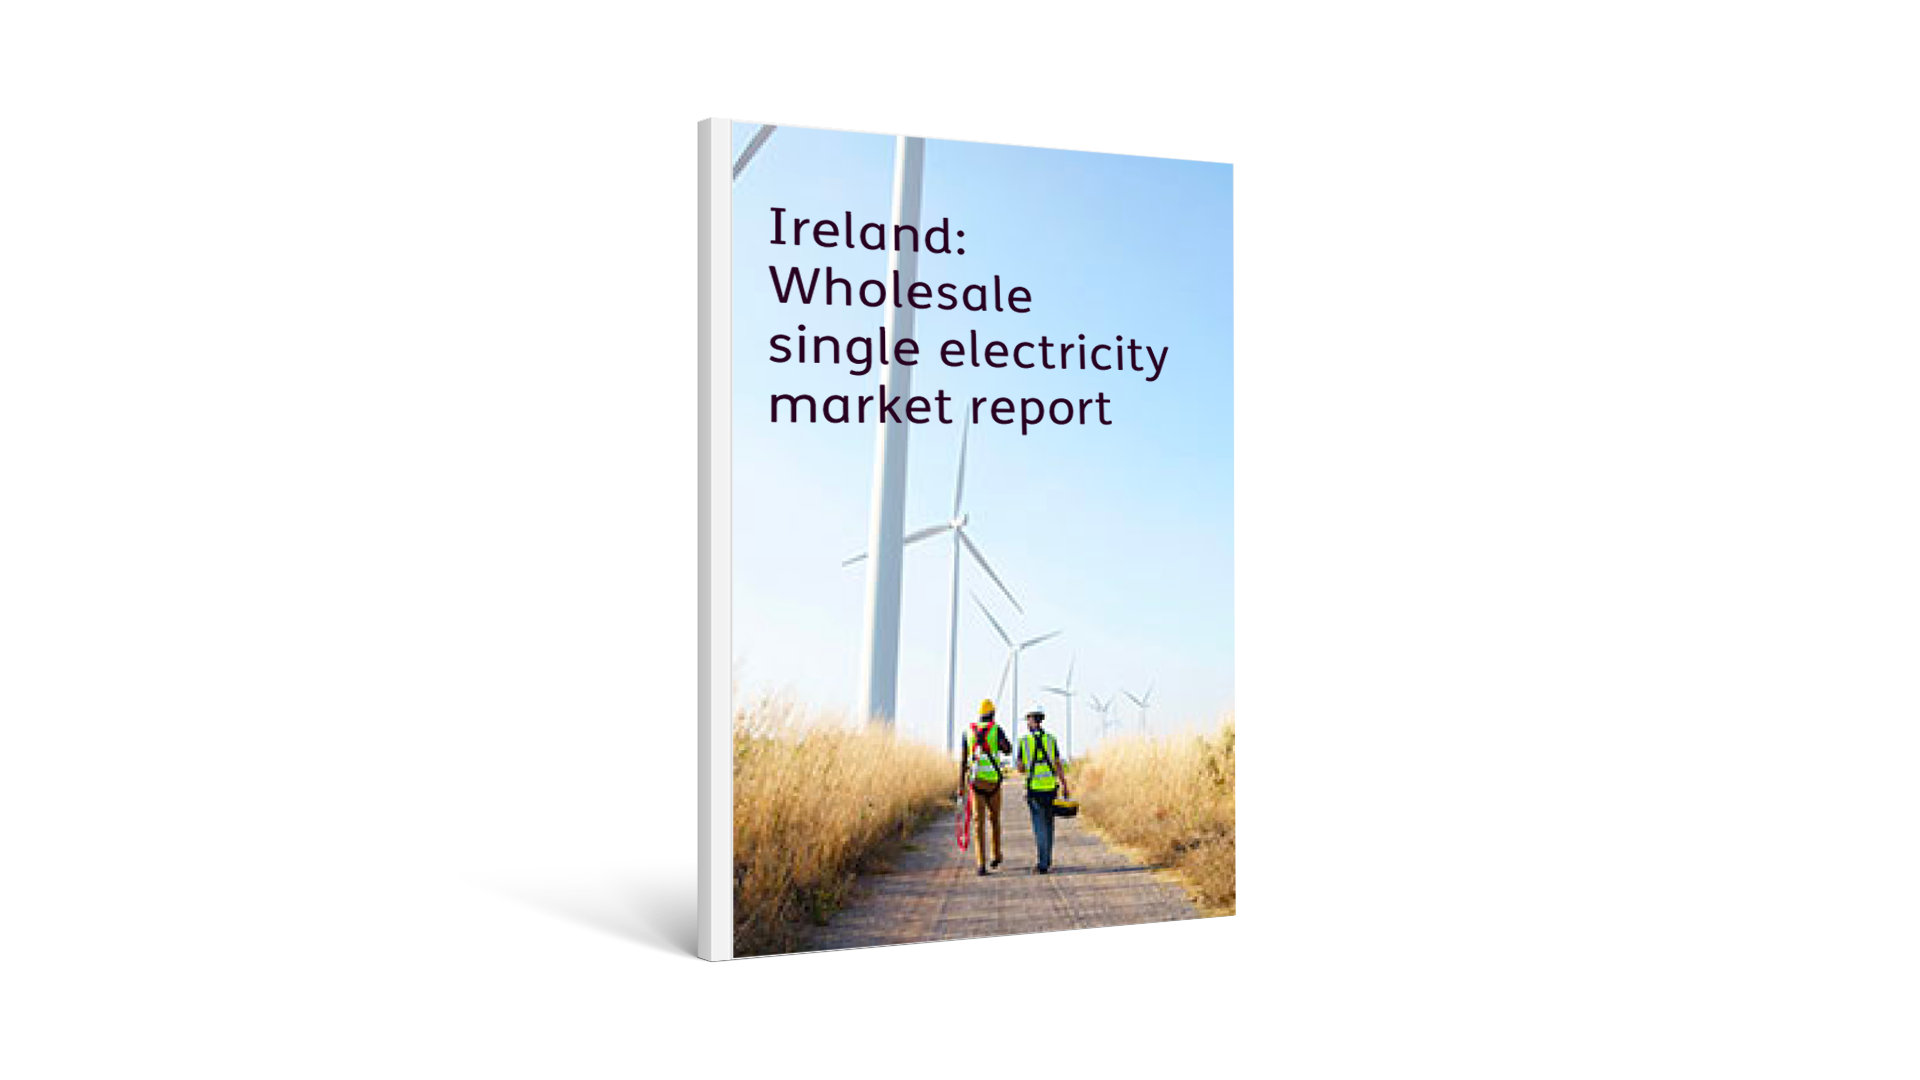 Ireland: Wholesale single electricity market report